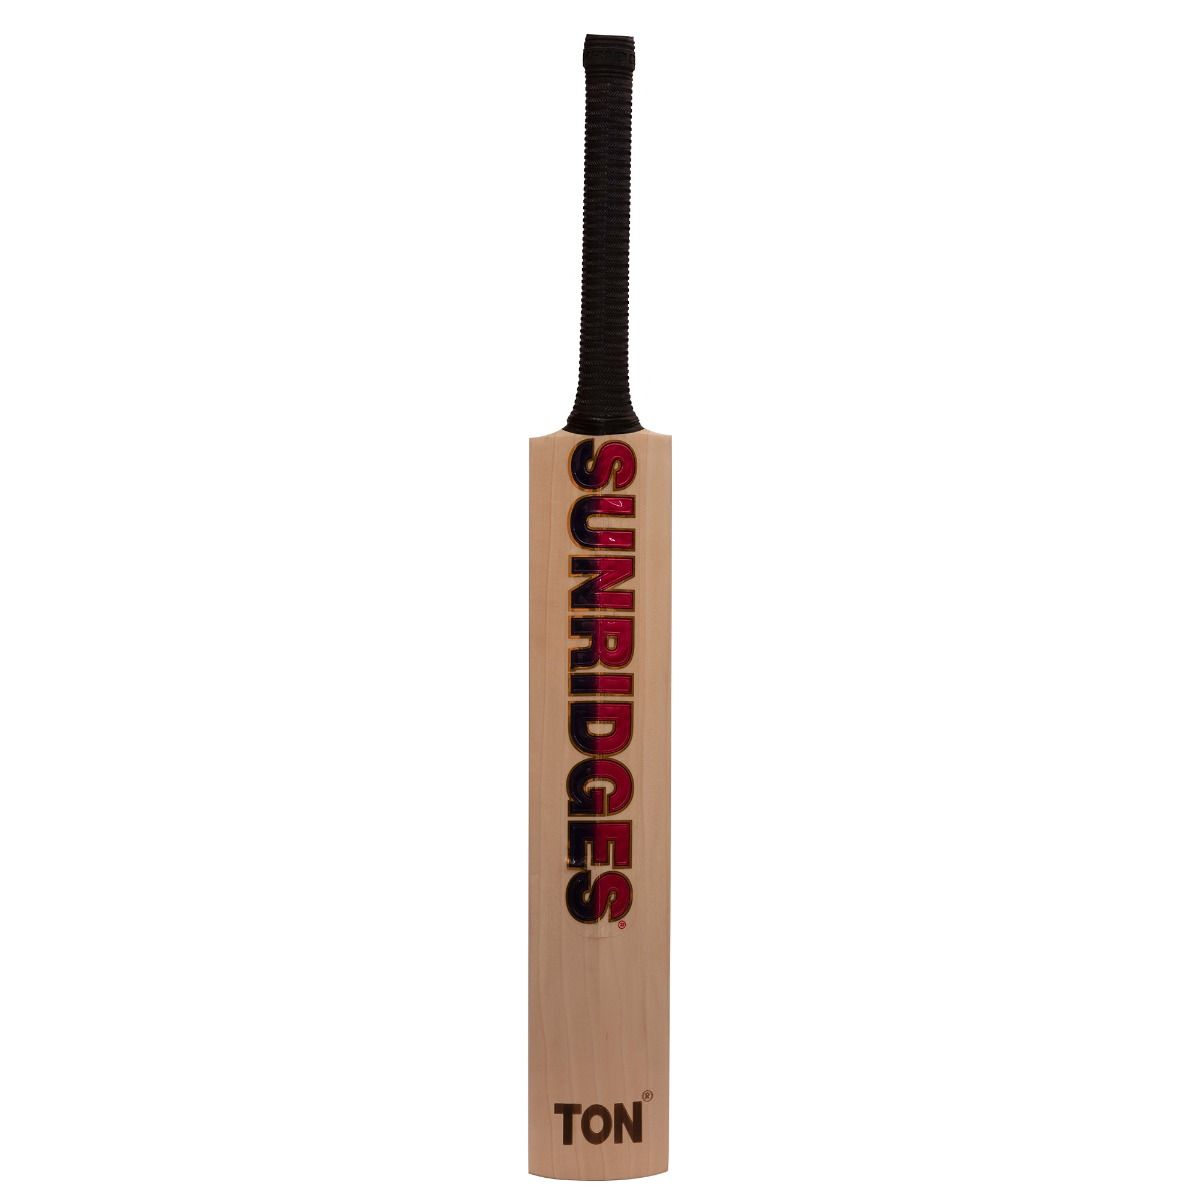 SS Cricket Bat Ton Vintage 7 Finisher